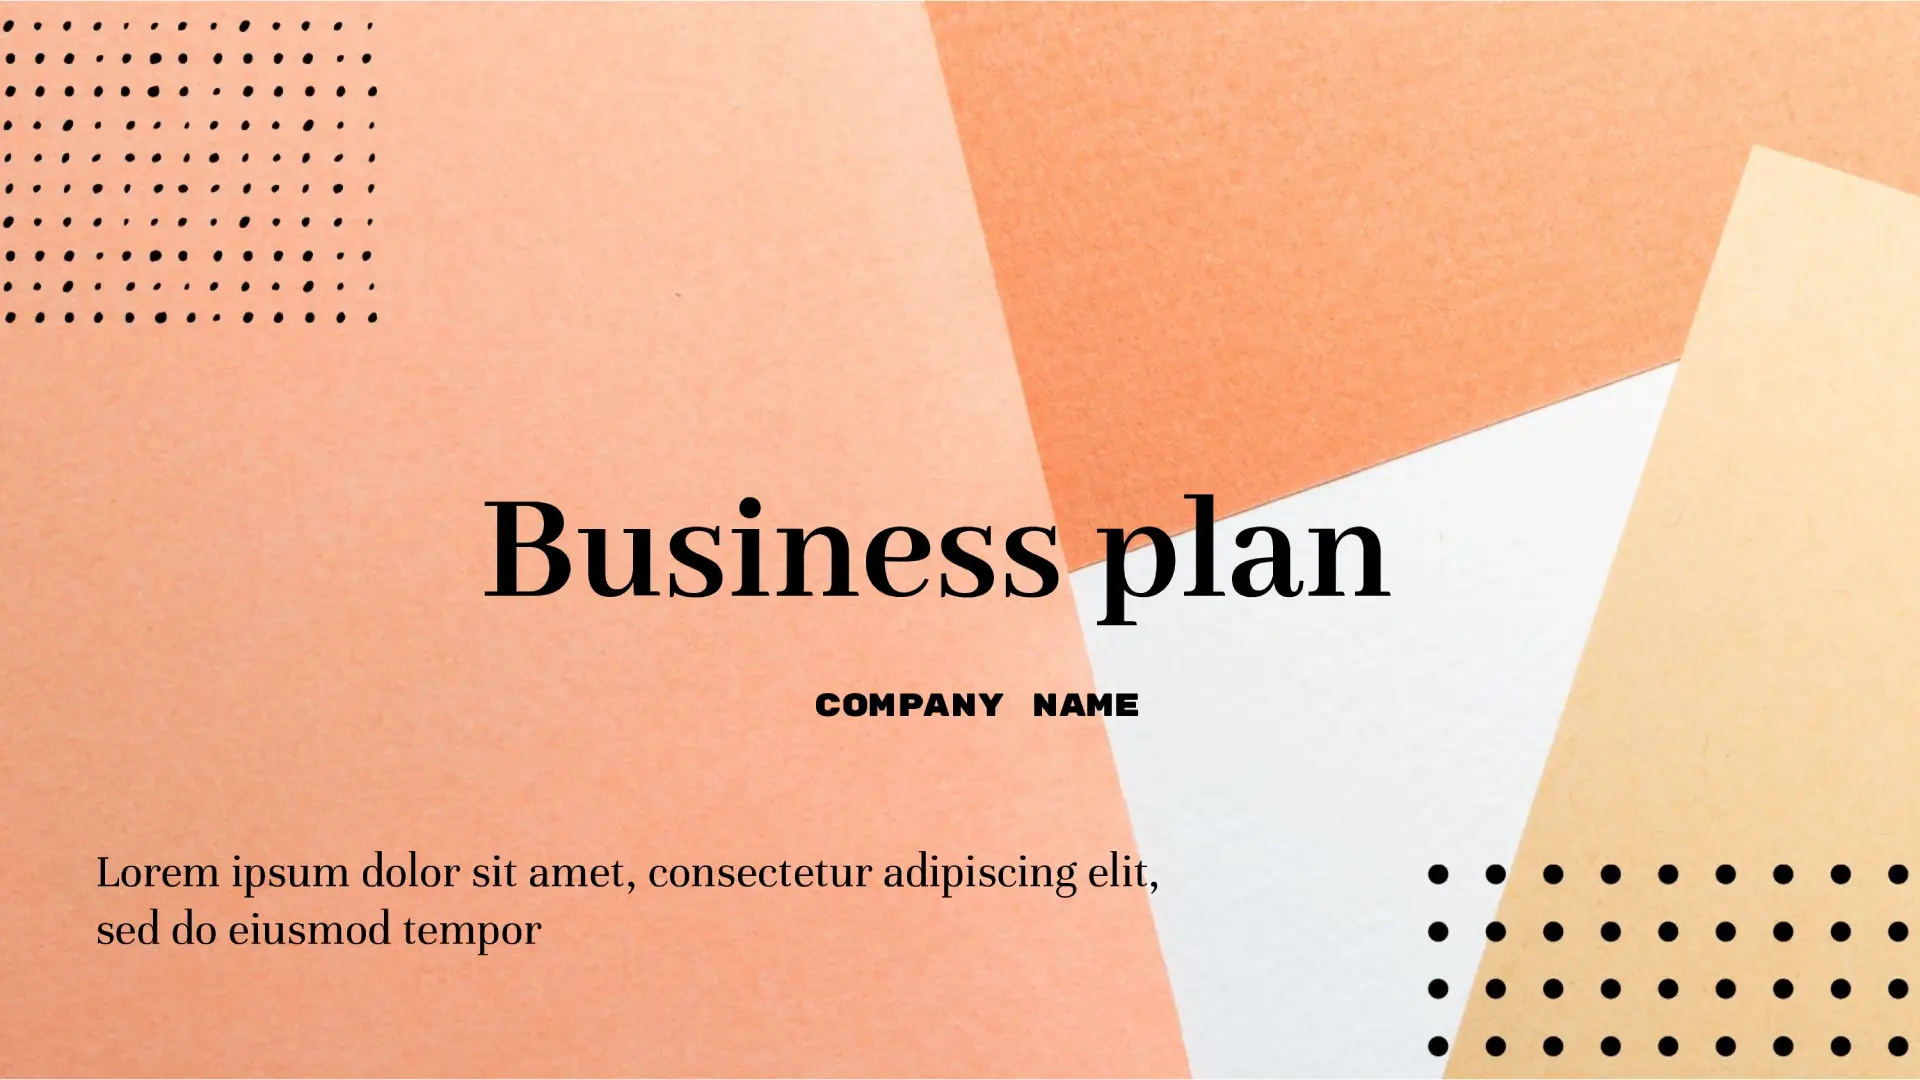 Business Plan Template for Google Slides